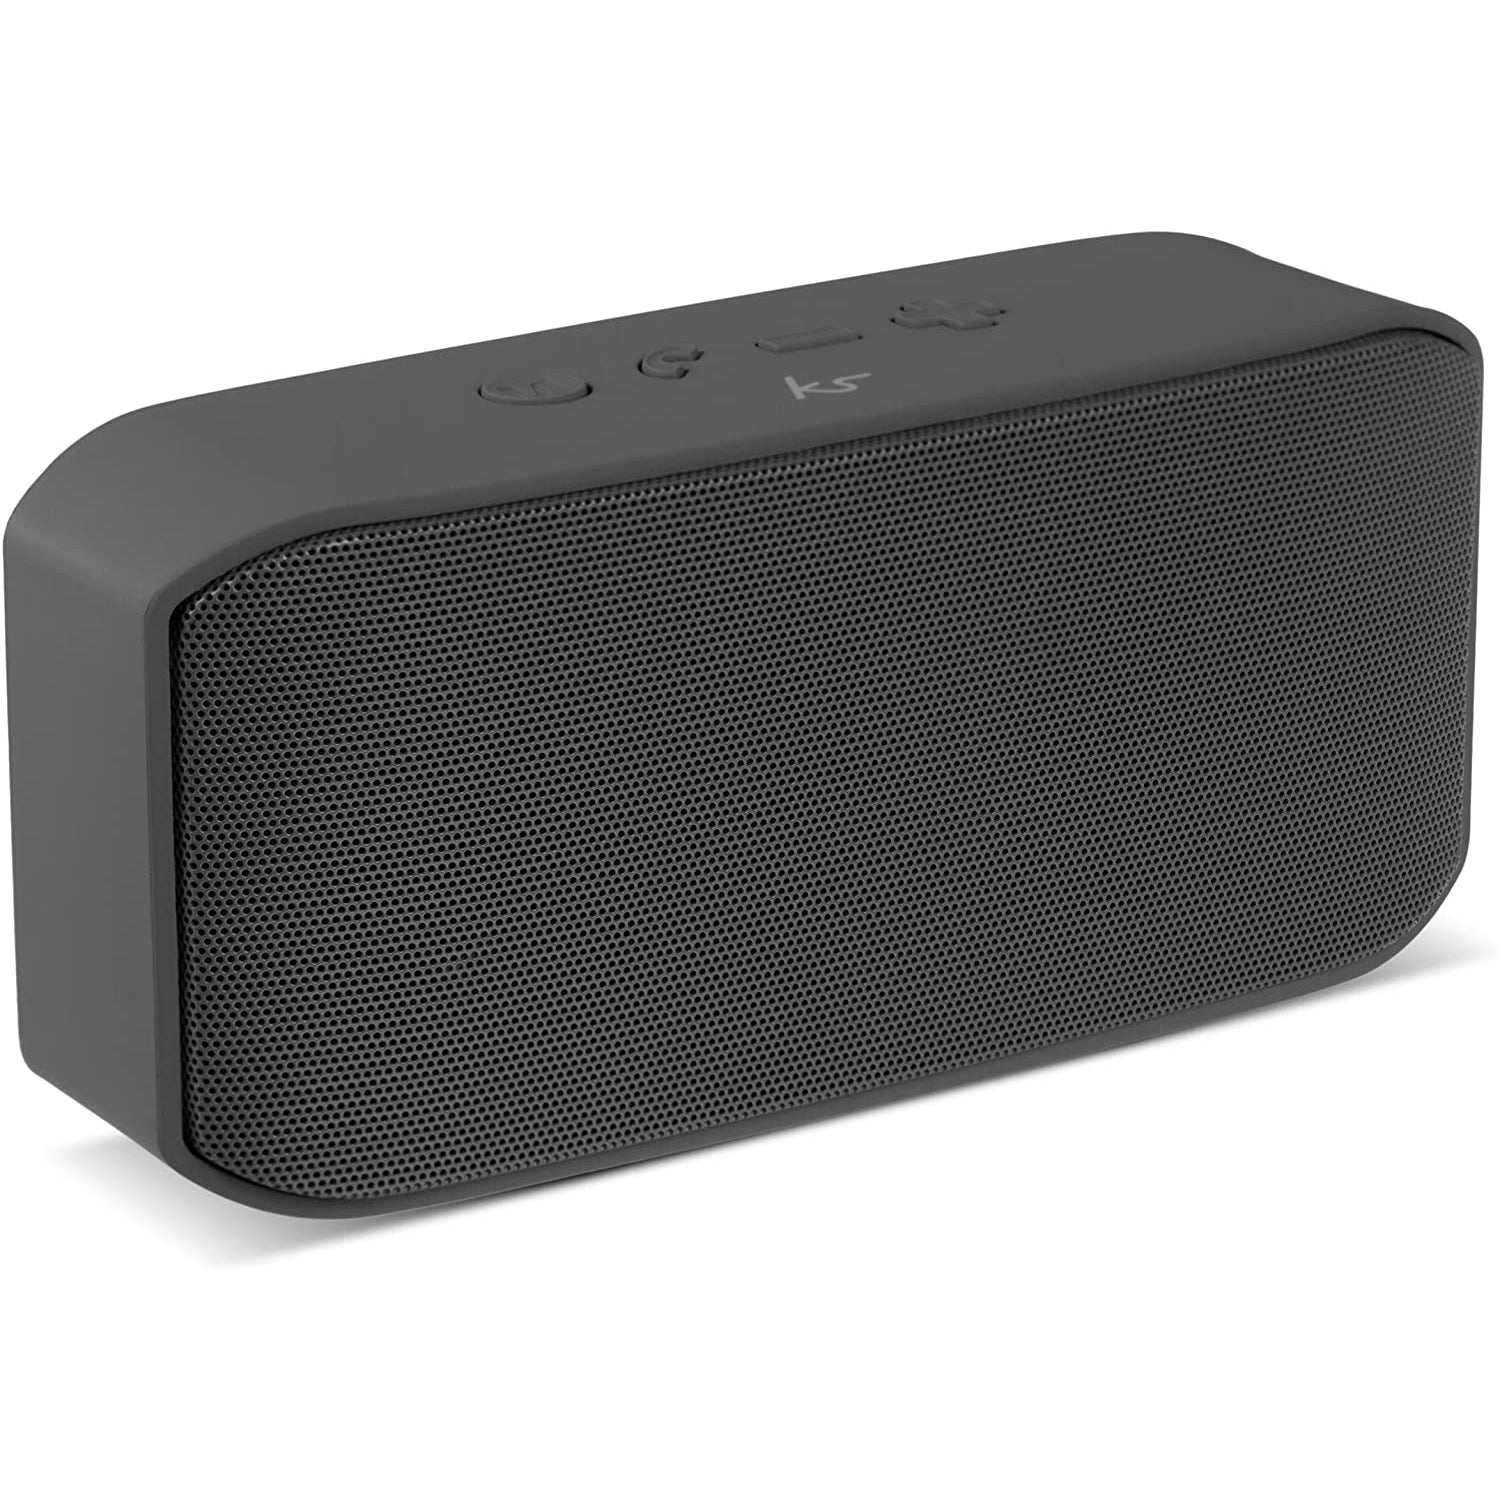 KitSound Miami Bluetooth Portable Wireless Speaker with Built in FM Radio - Grey